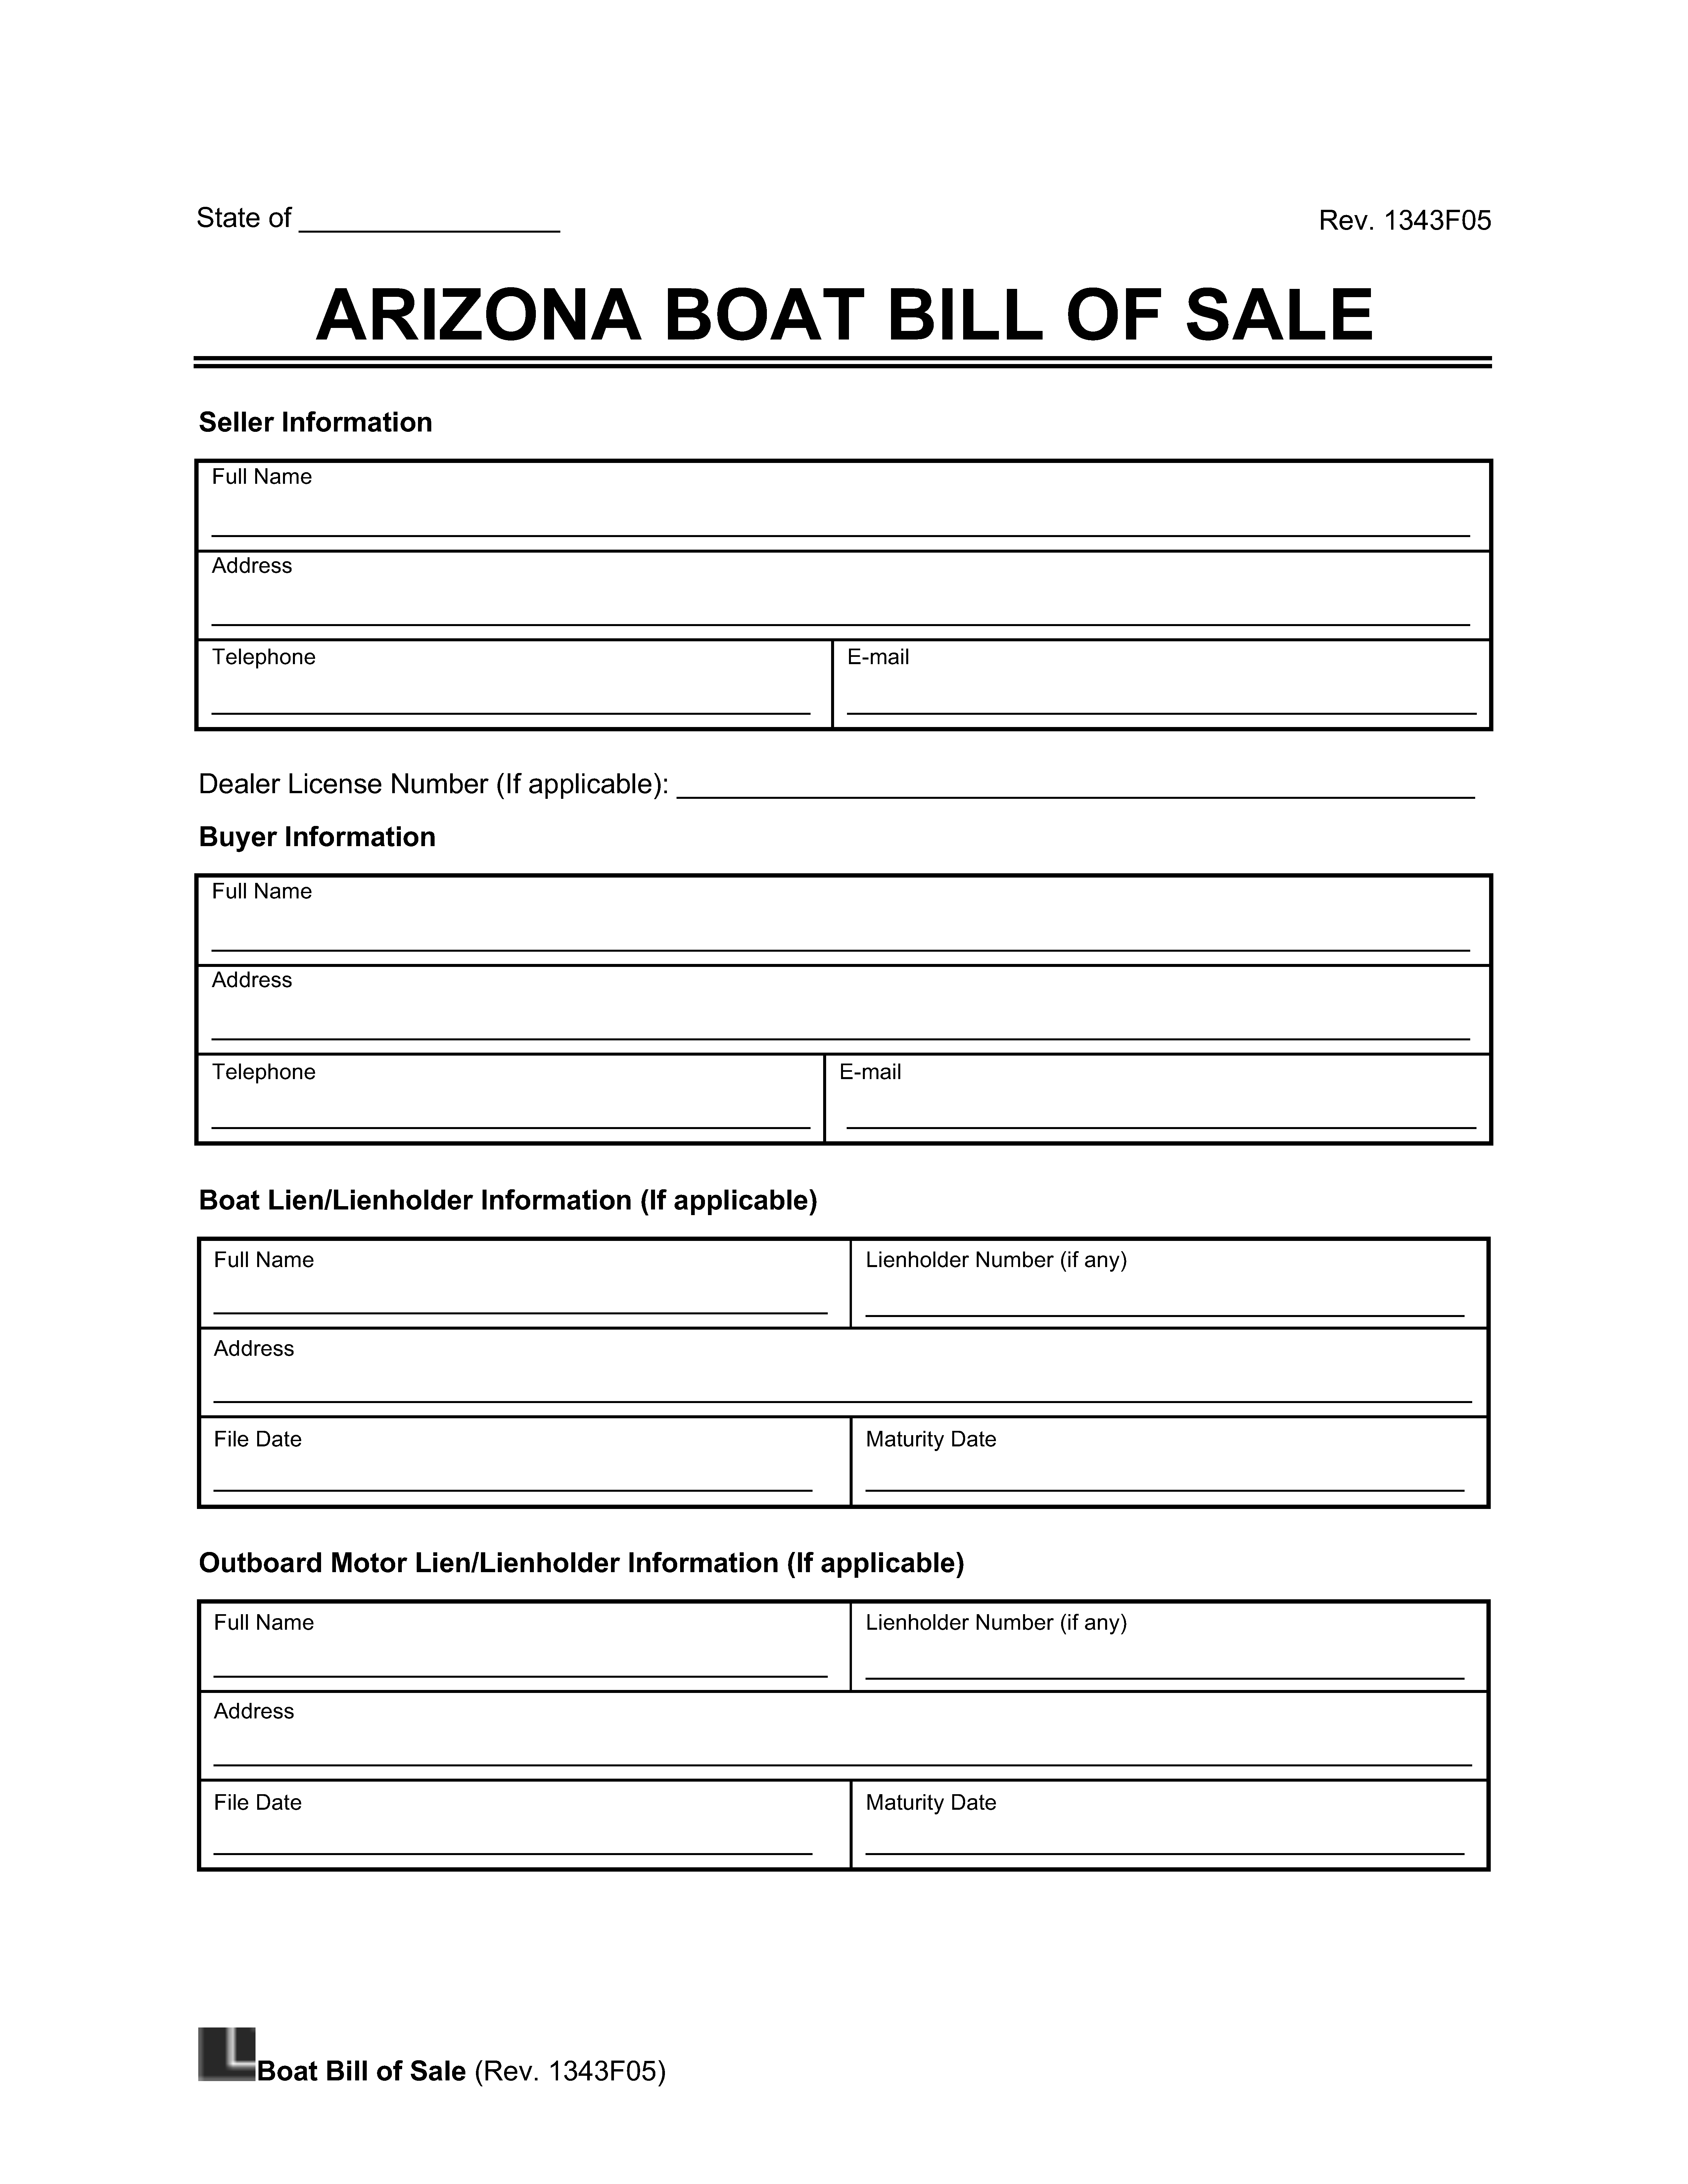 Arizona Boat Bill of Sale screenshot